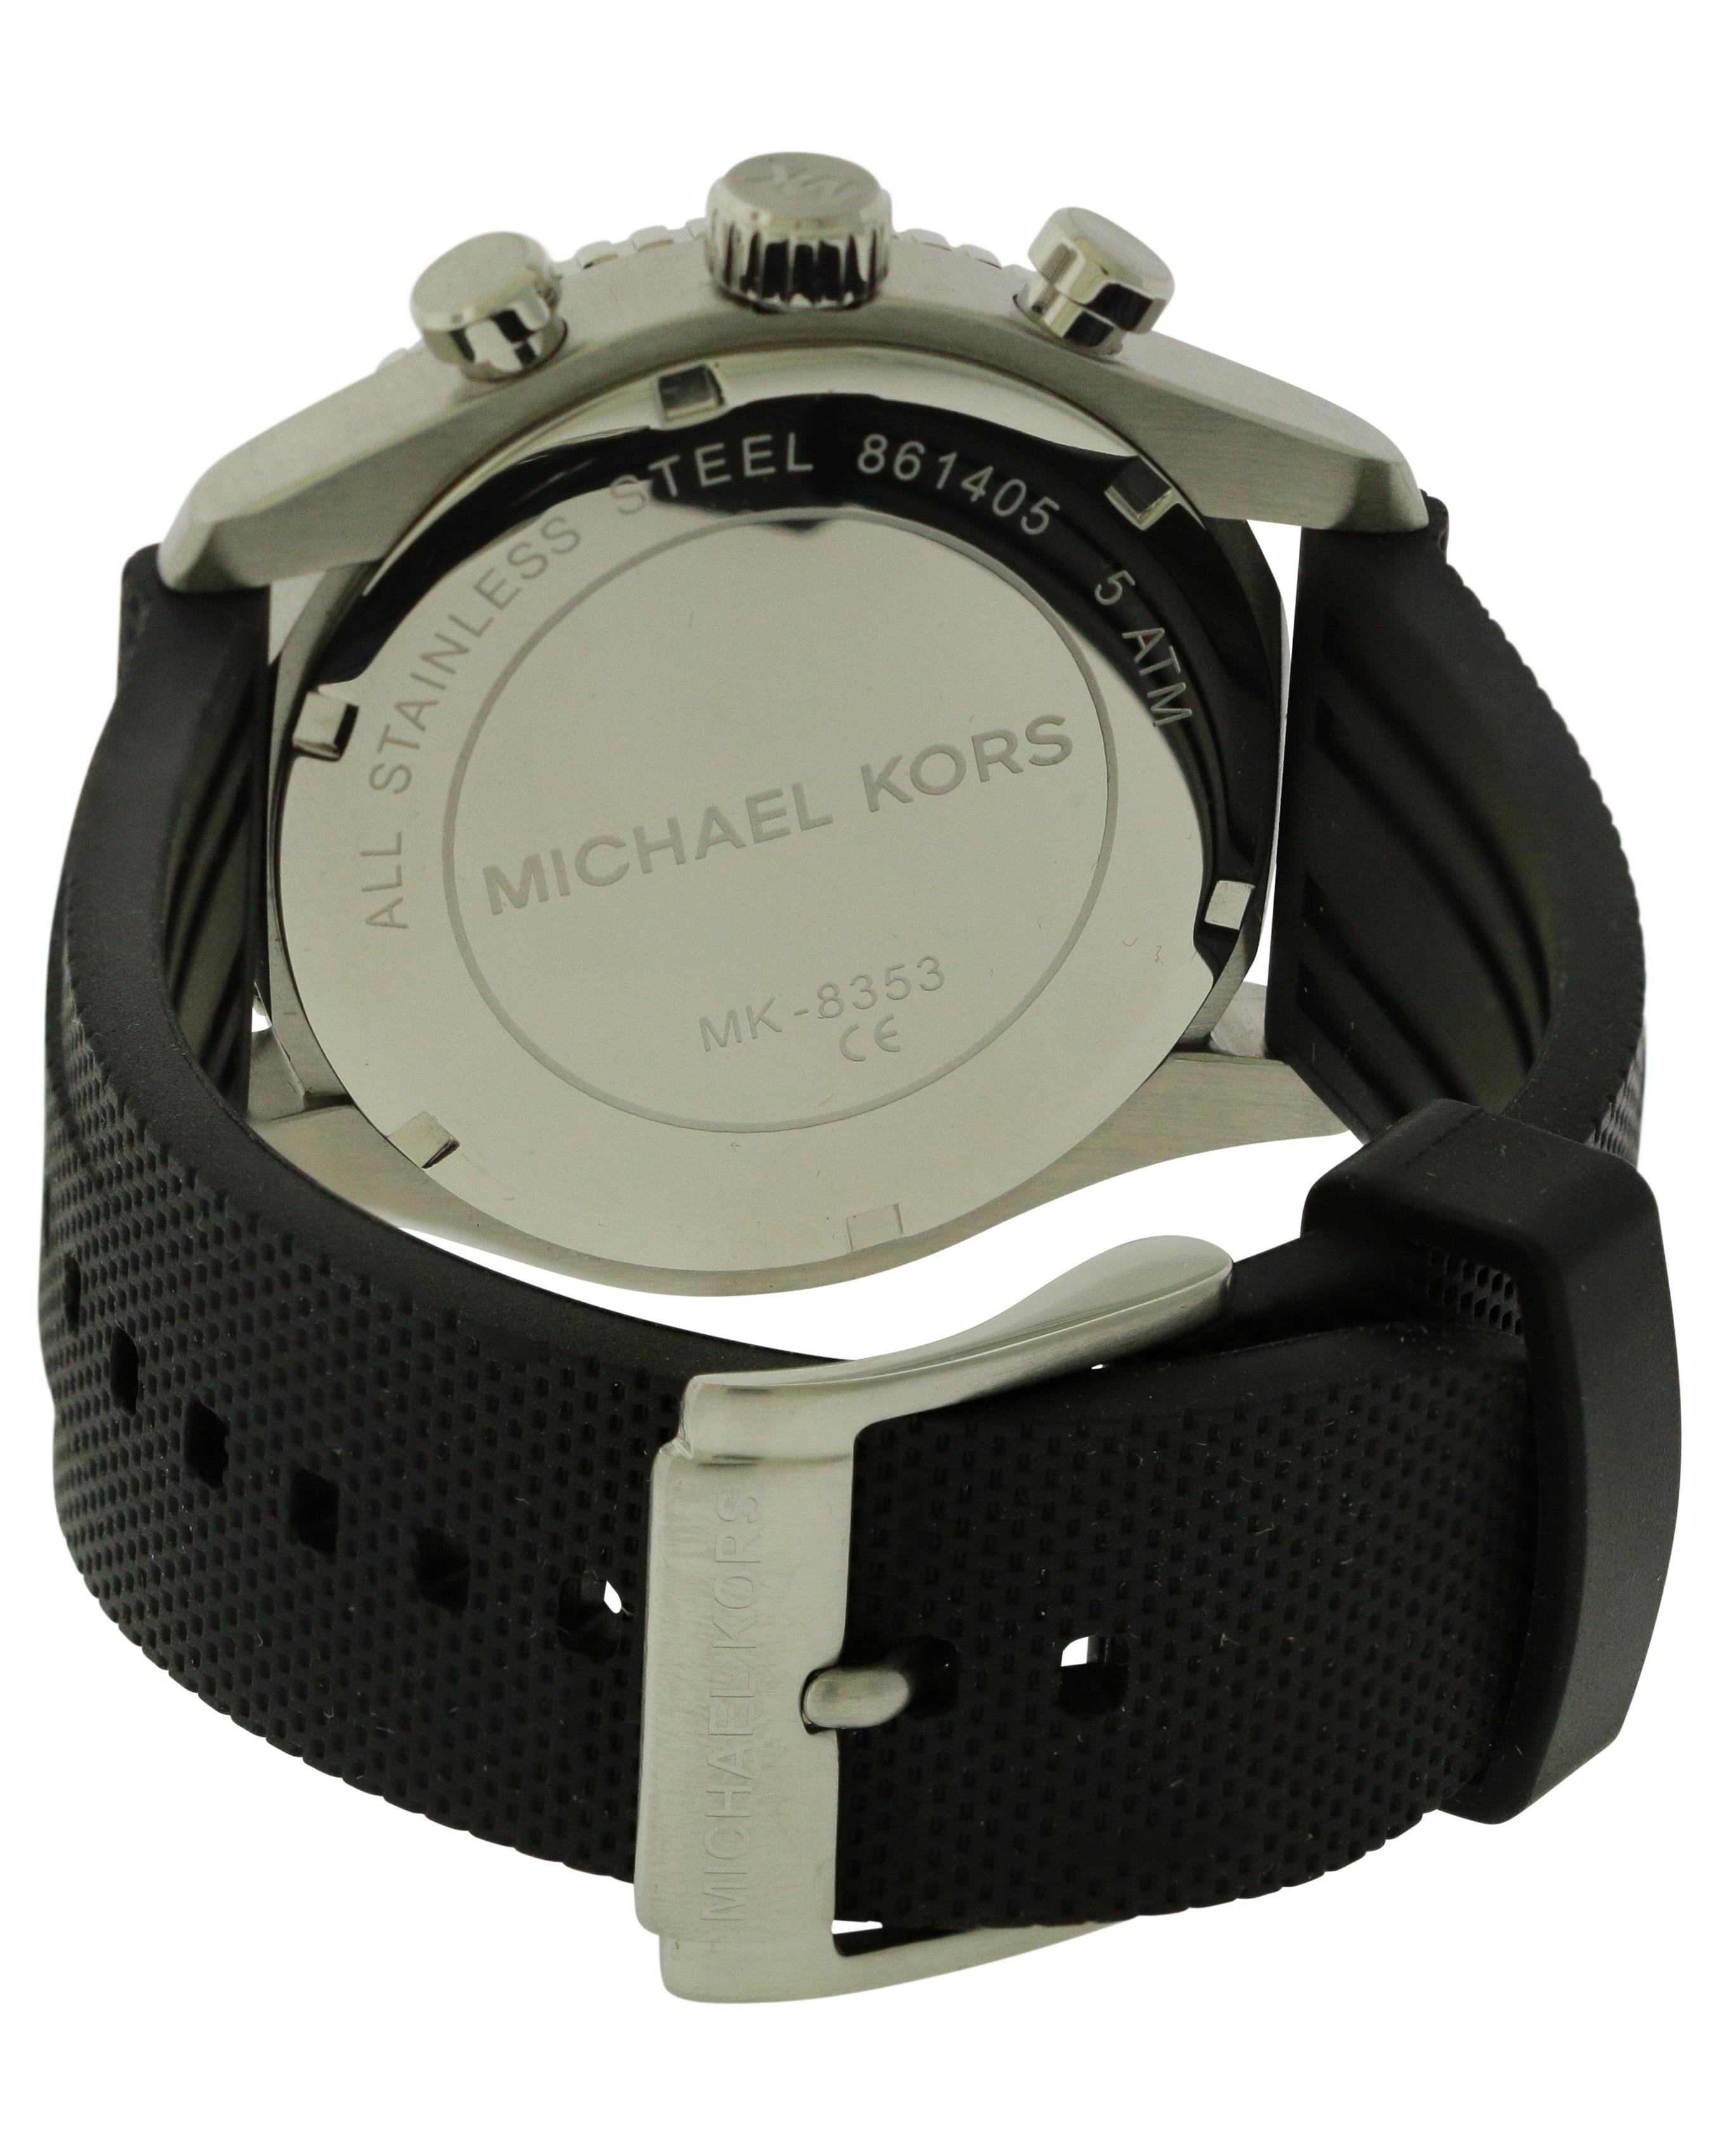 Michael Kors Men's Richardson Silicone Chronograph Watch MK8353